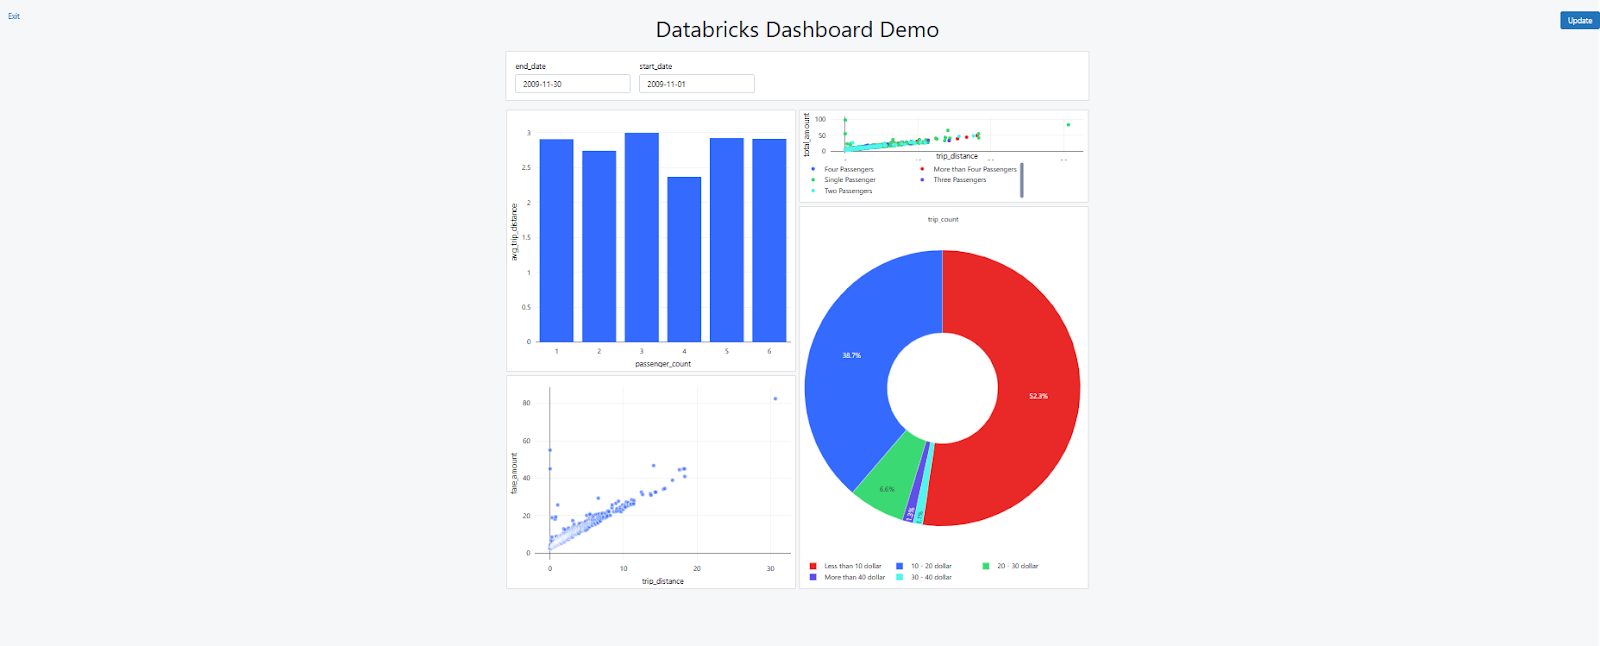 Presenting Databricks Dashboard